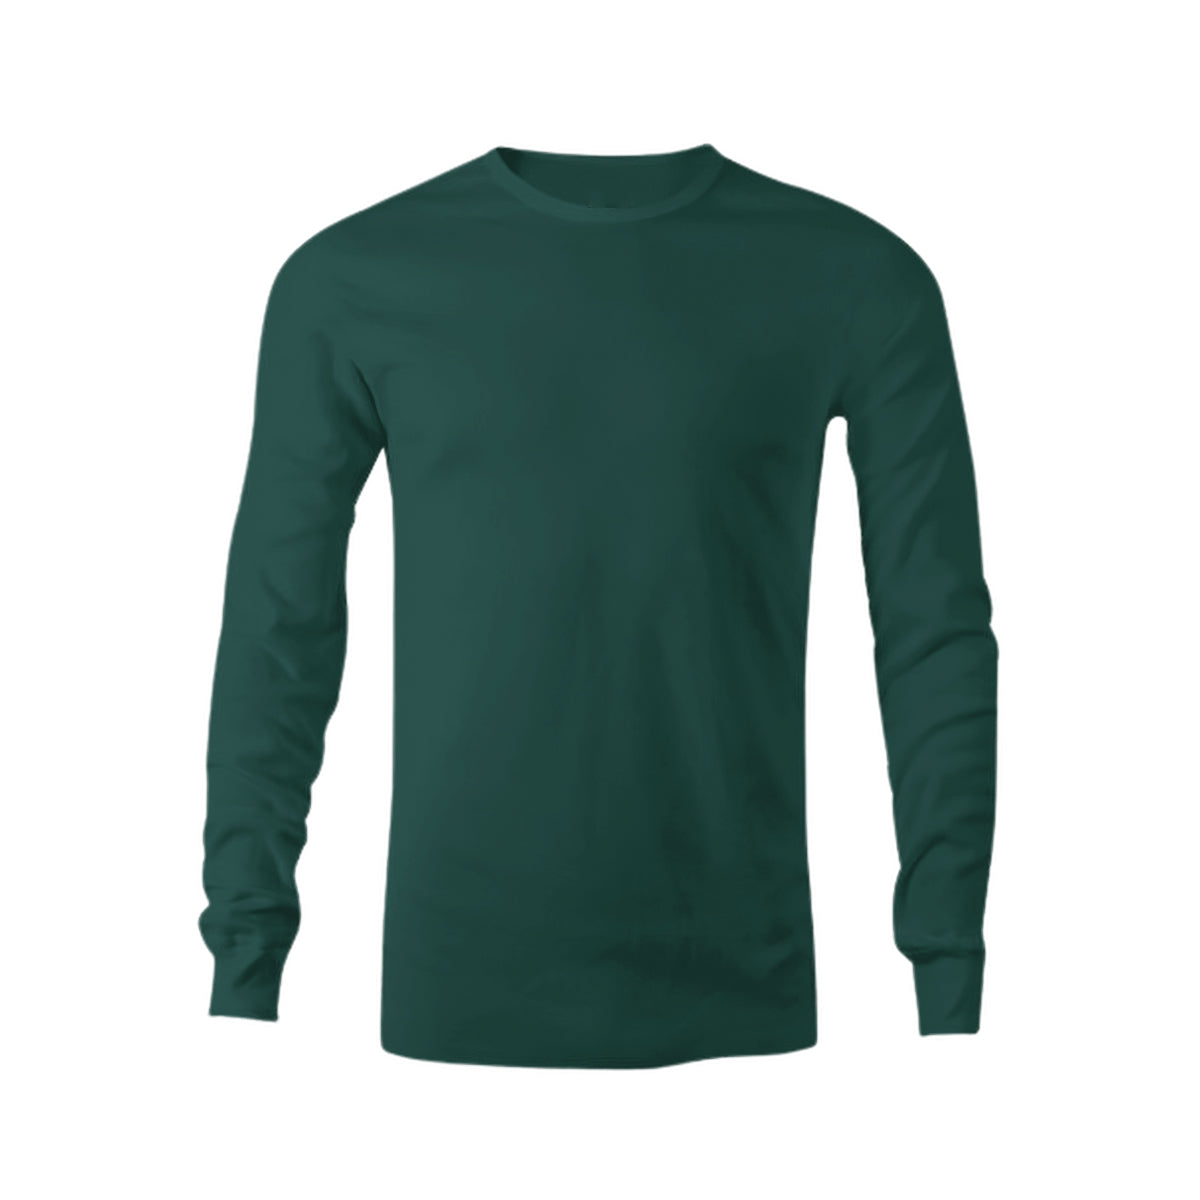 HercShirt 3.0 - The World's Cleanest Long Sleeve Shirt